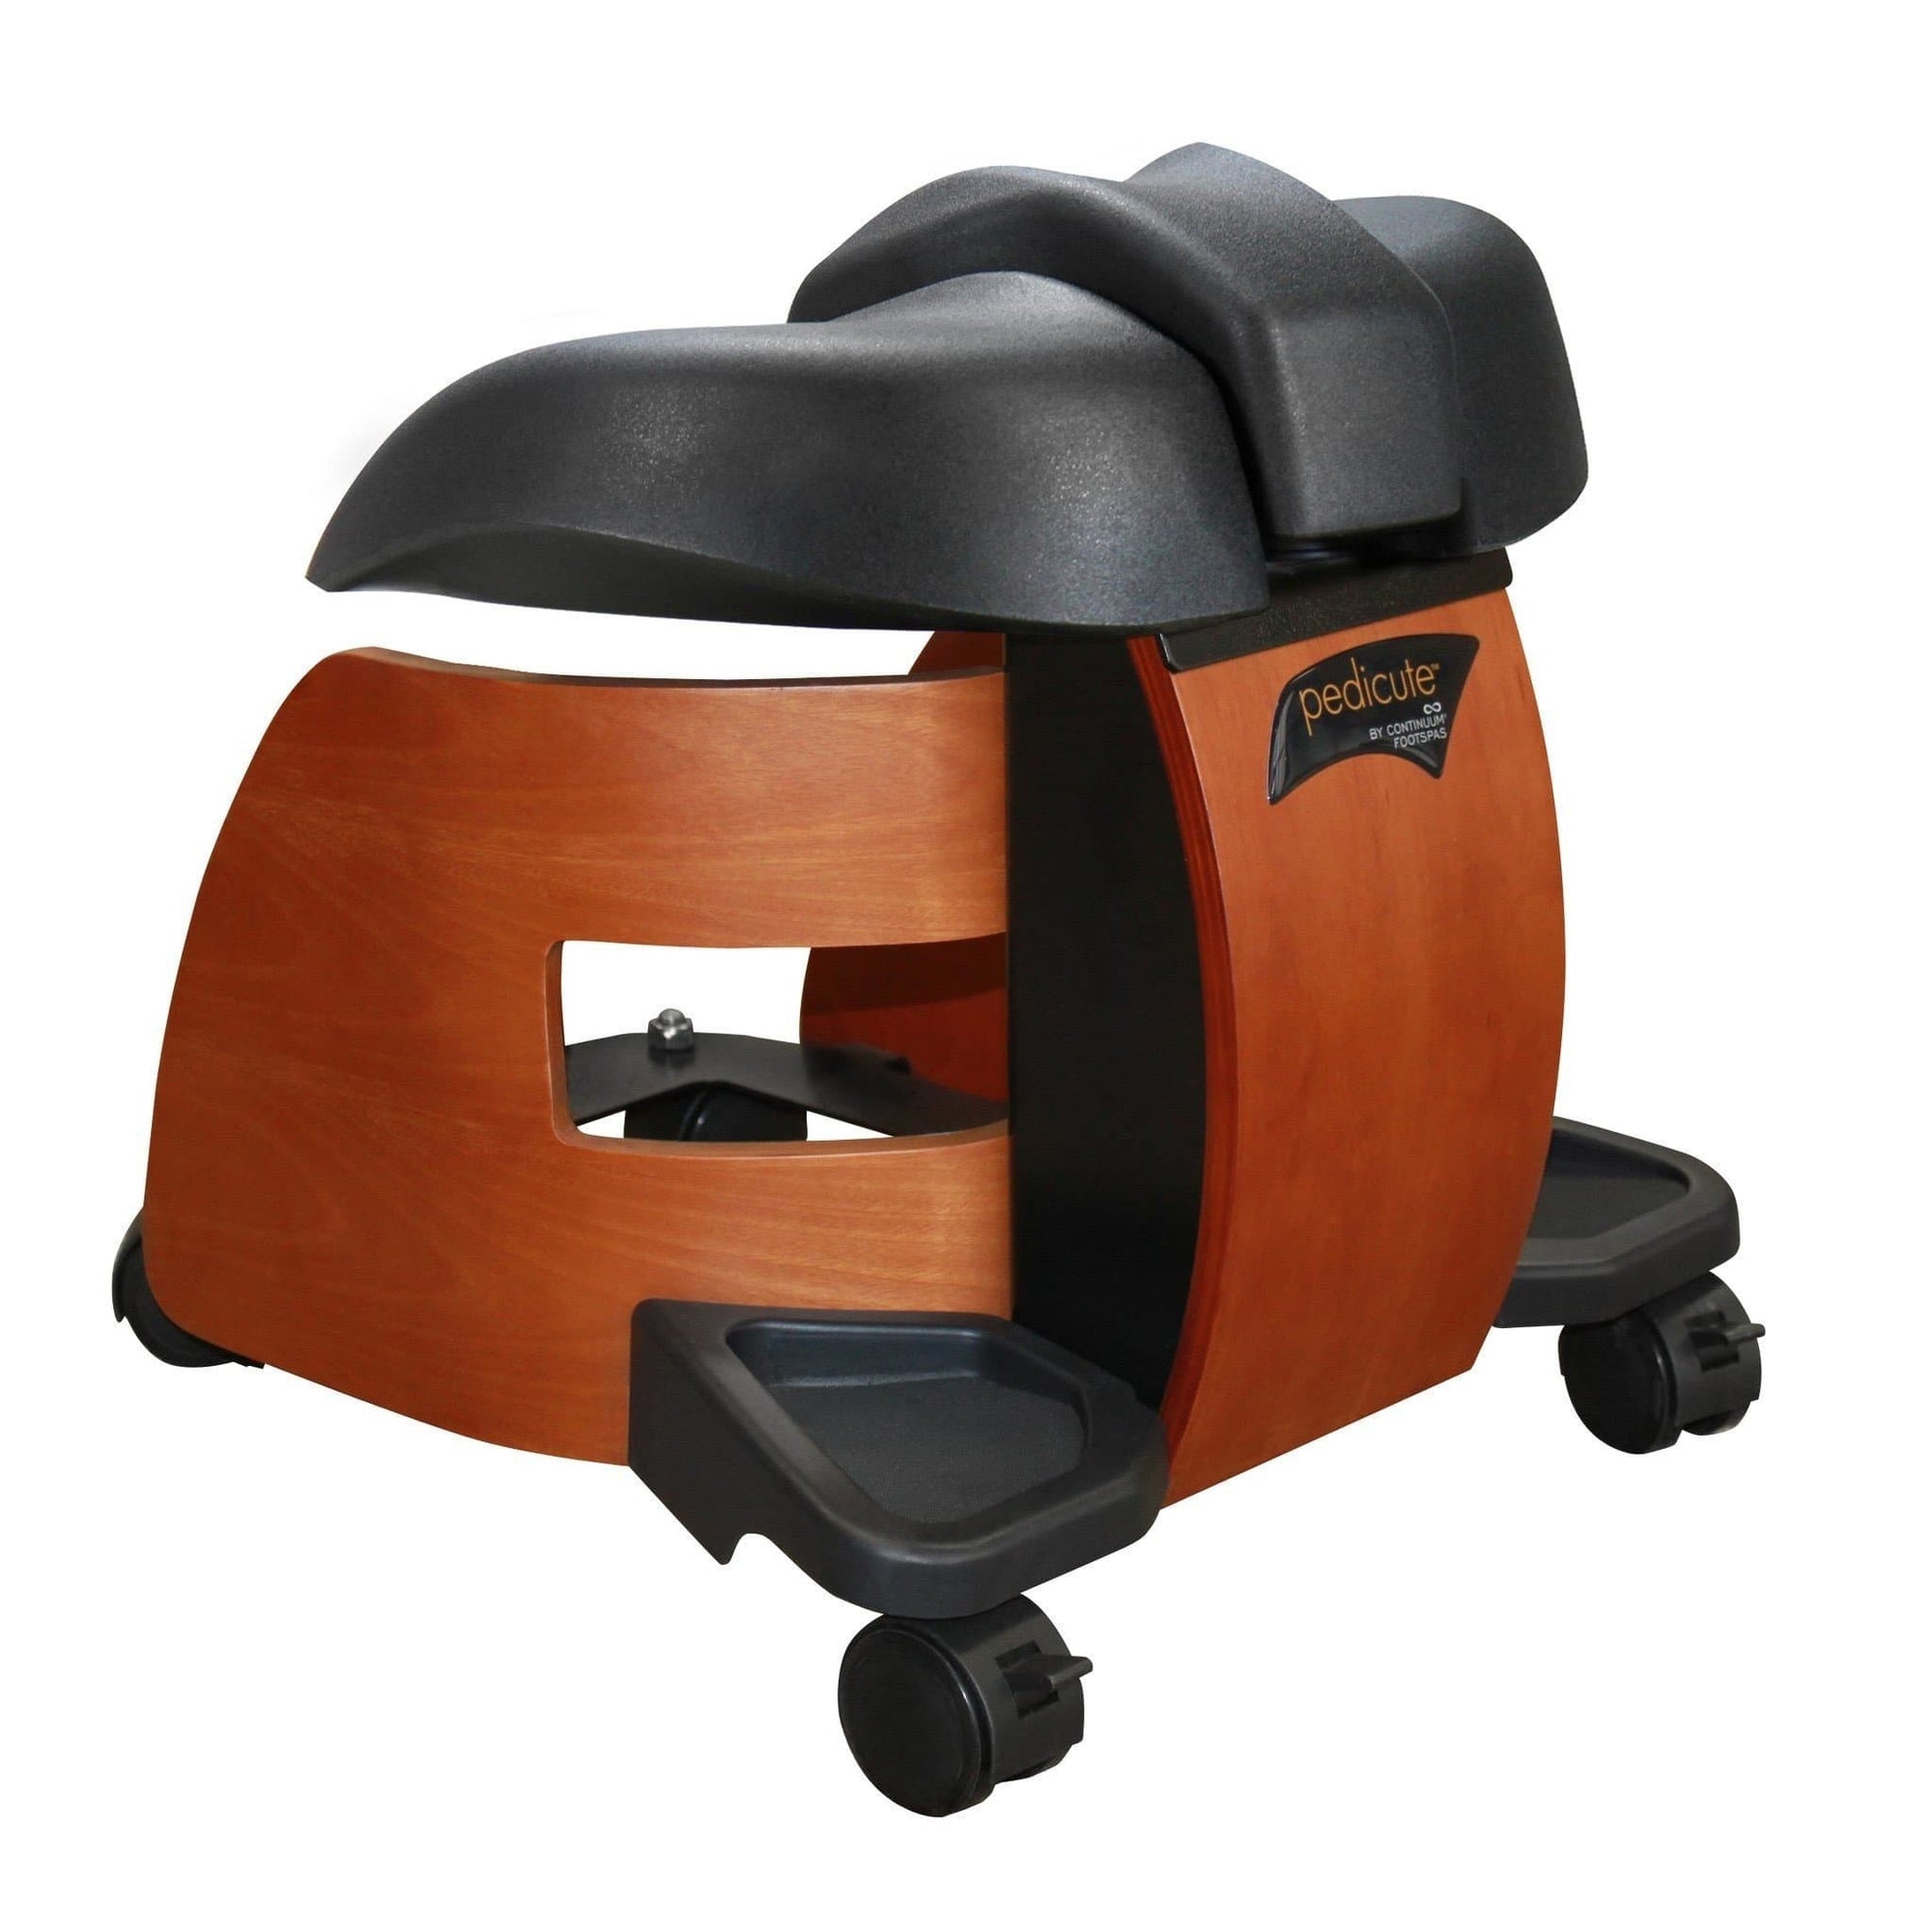 Continuum Continuum Pedicute Portable Spa Pedicure & Spa Chairs - ChairsThatGive